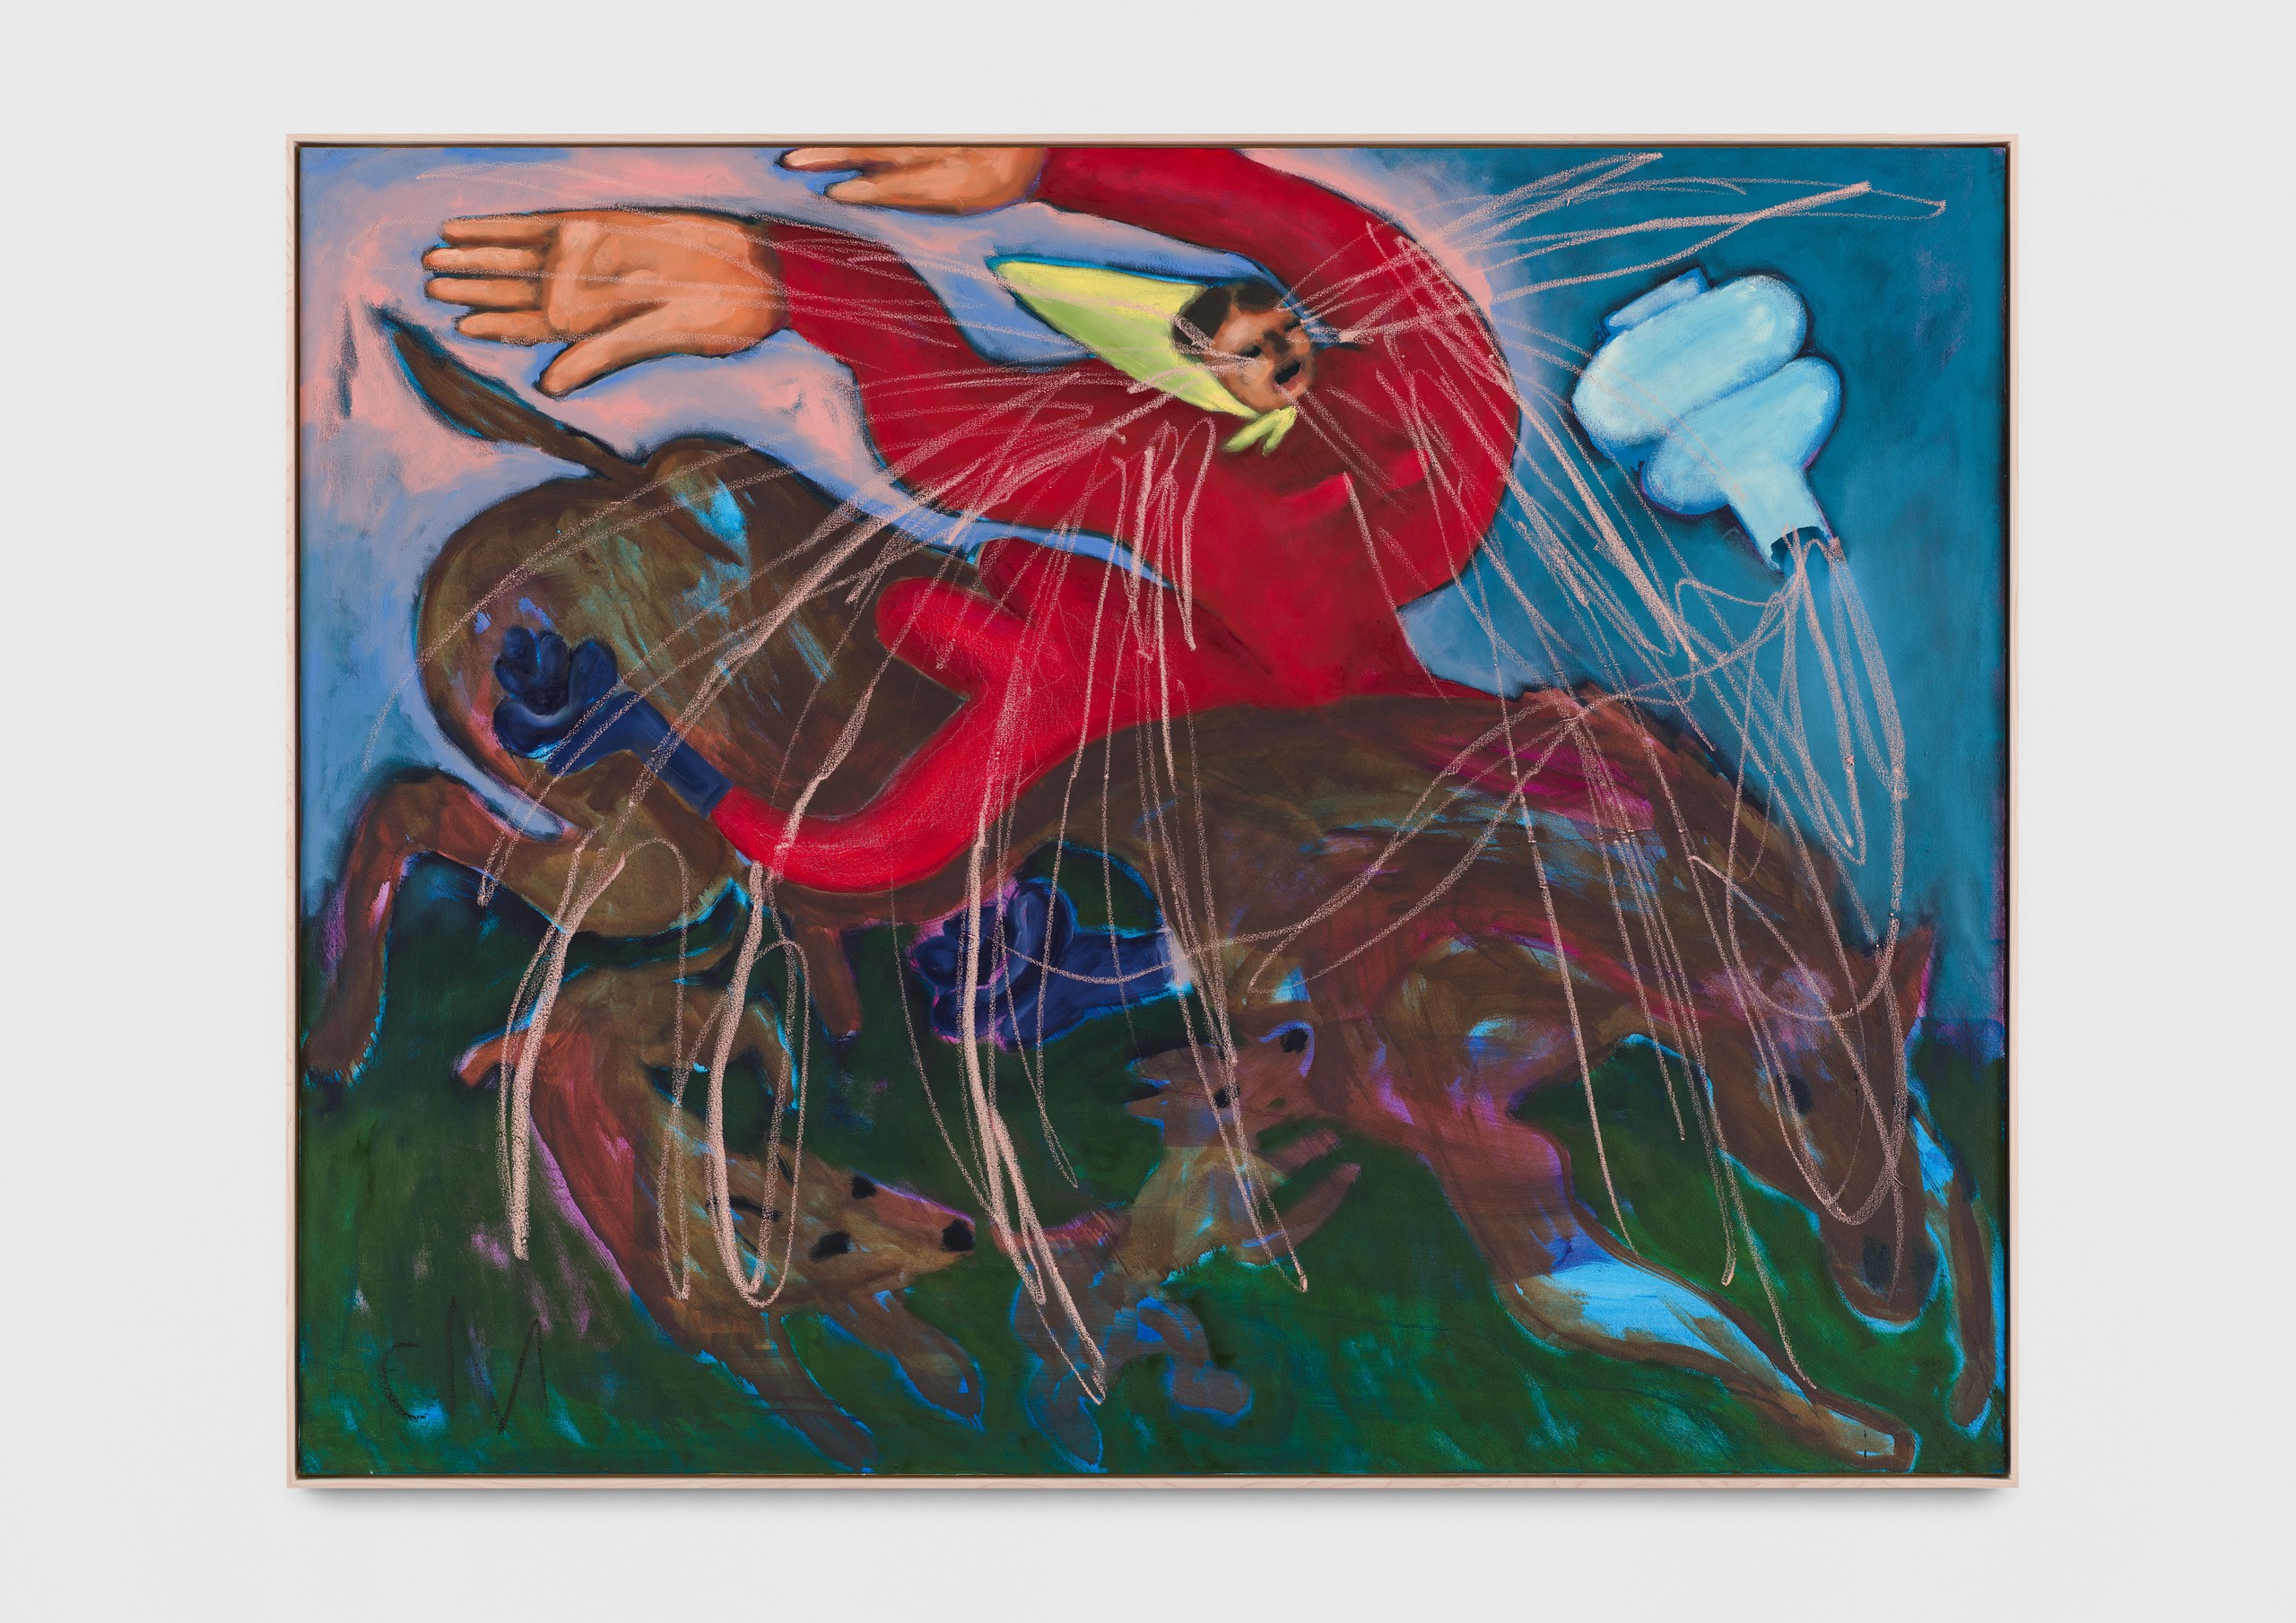 Conny MaierWendung mit Tier, 2022Oil, oil stick, pigments on canvas142.5 x 182.5 x 4.5 cm56 1/2 x 72 x 2 in